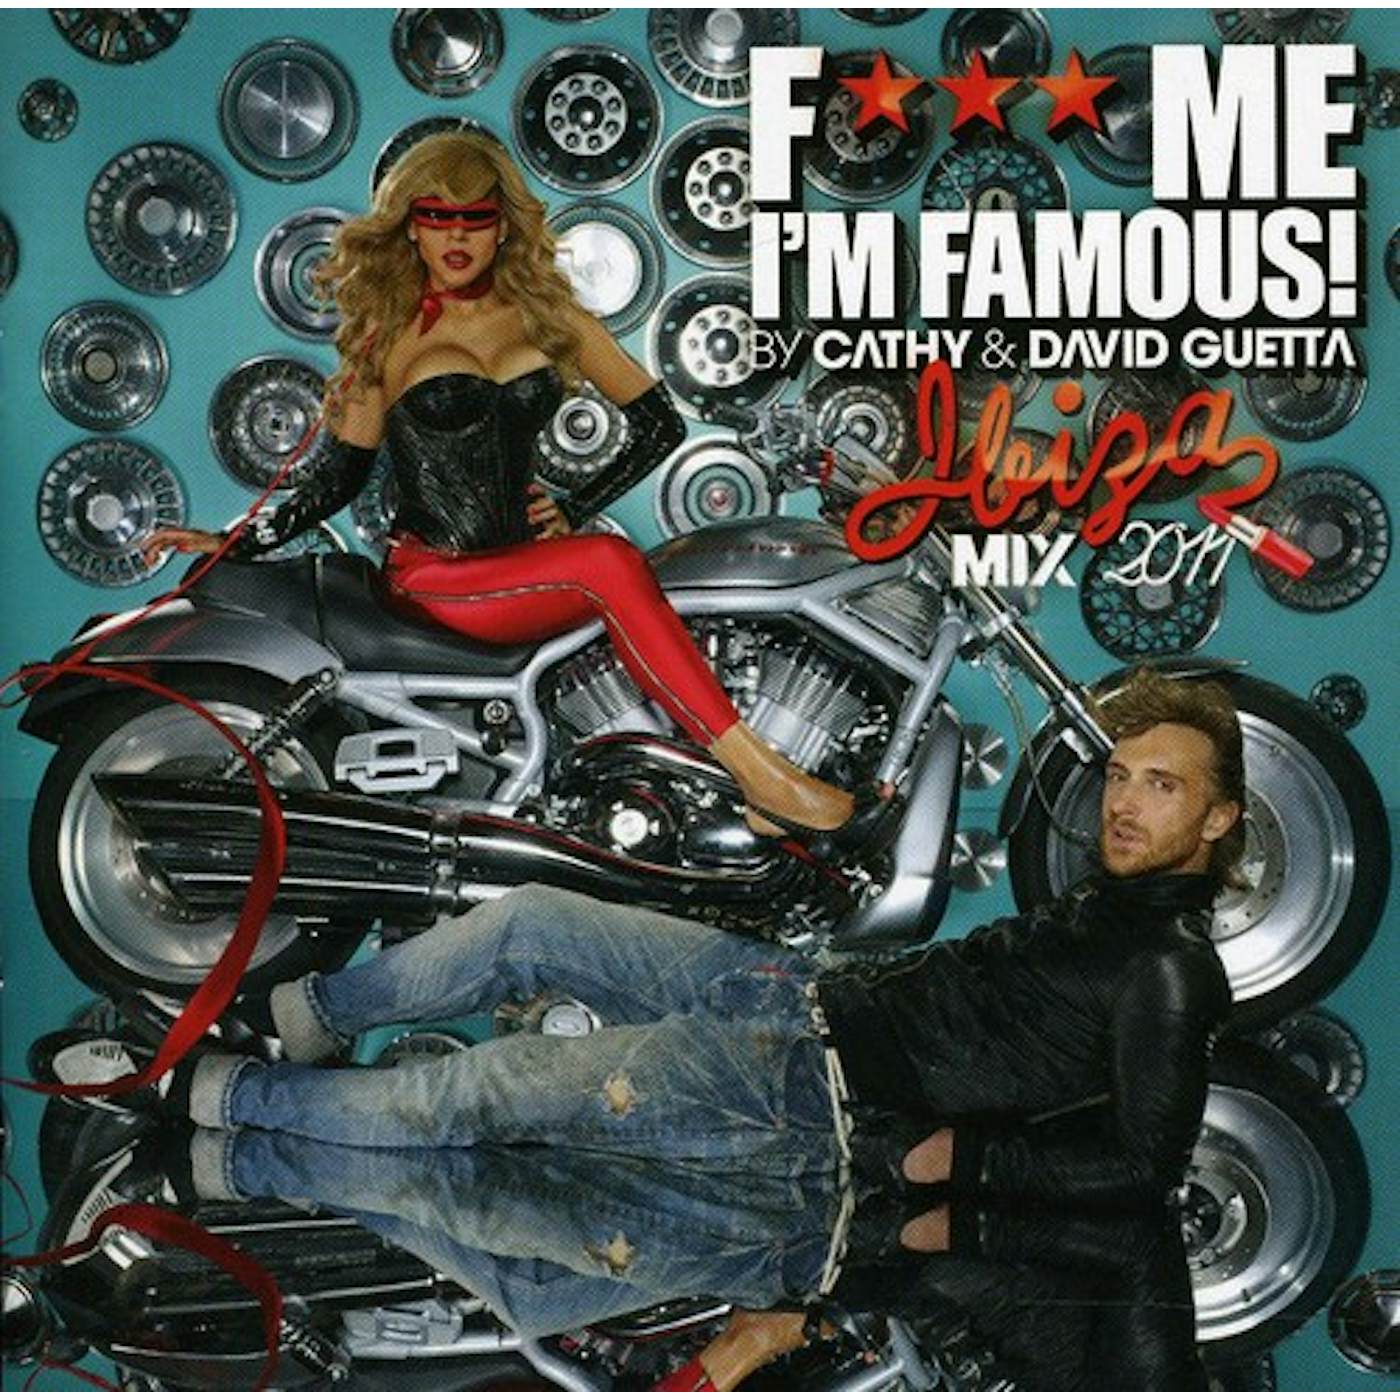 David Guetta F*** ME IM FAMOUS 2011 CD